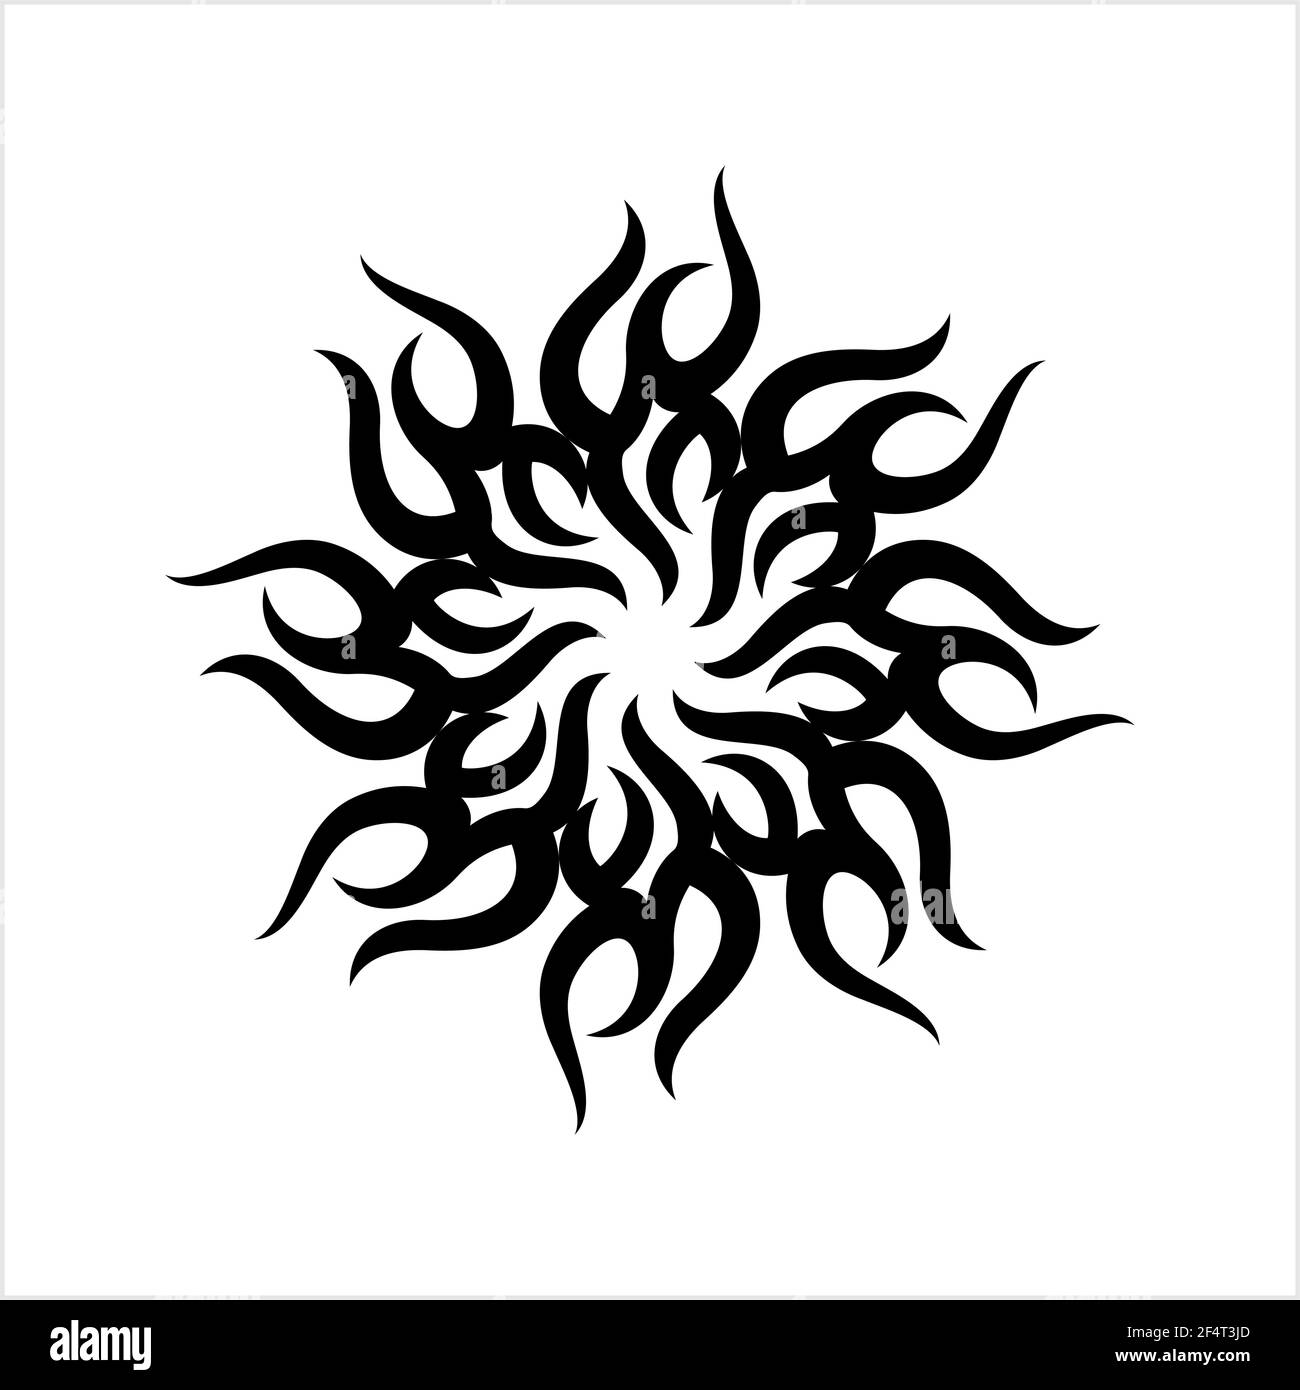 Tribal Fire Flame Tattoo Design Vector Art Illustration Stock Vector Image & Art - Alamy